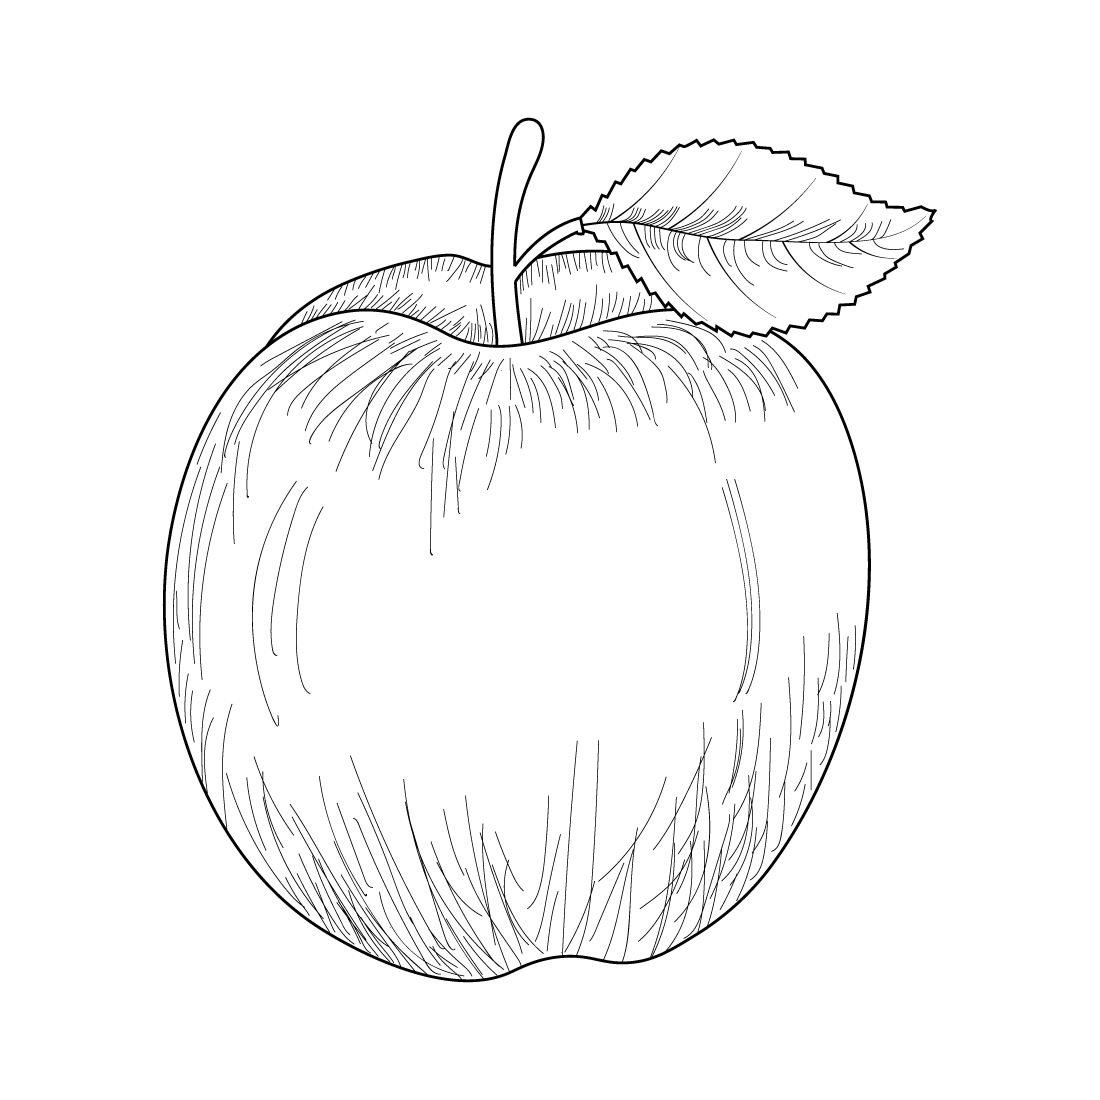 Apple Fruits outline illustration vector cover image.